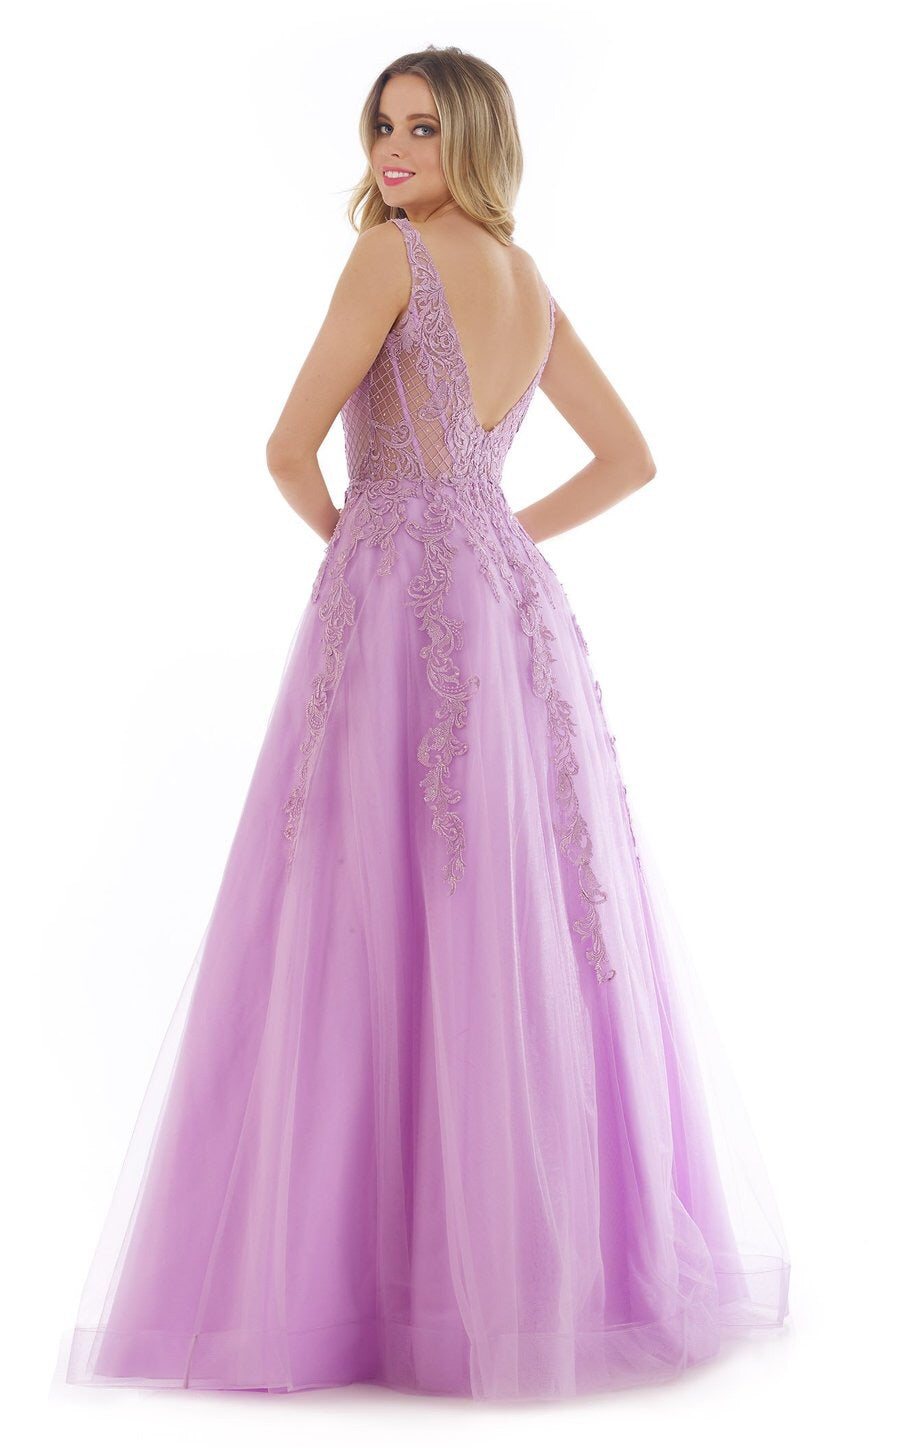 Providing special Occasion, prom & graduation dresses – Sophia’s Boutique